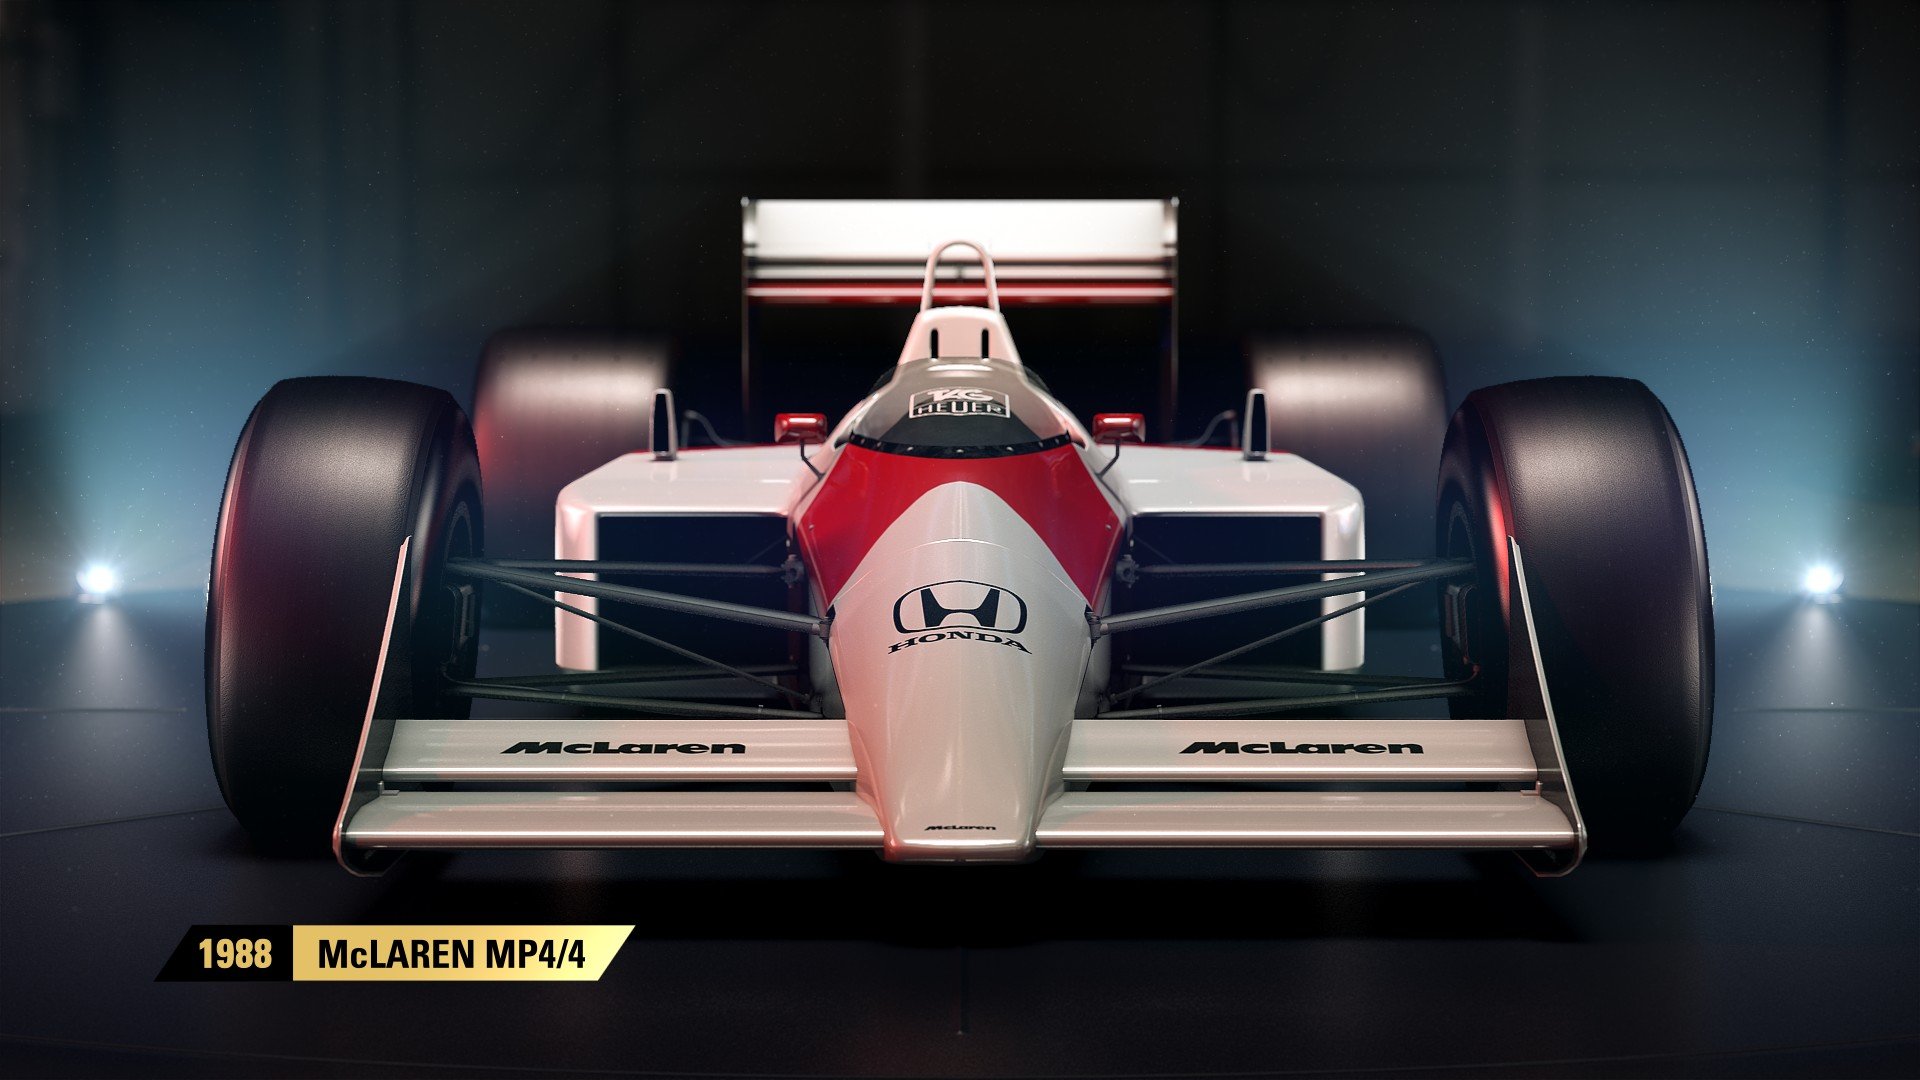 F1 2017 announce image 1988 McLaren MP4 4